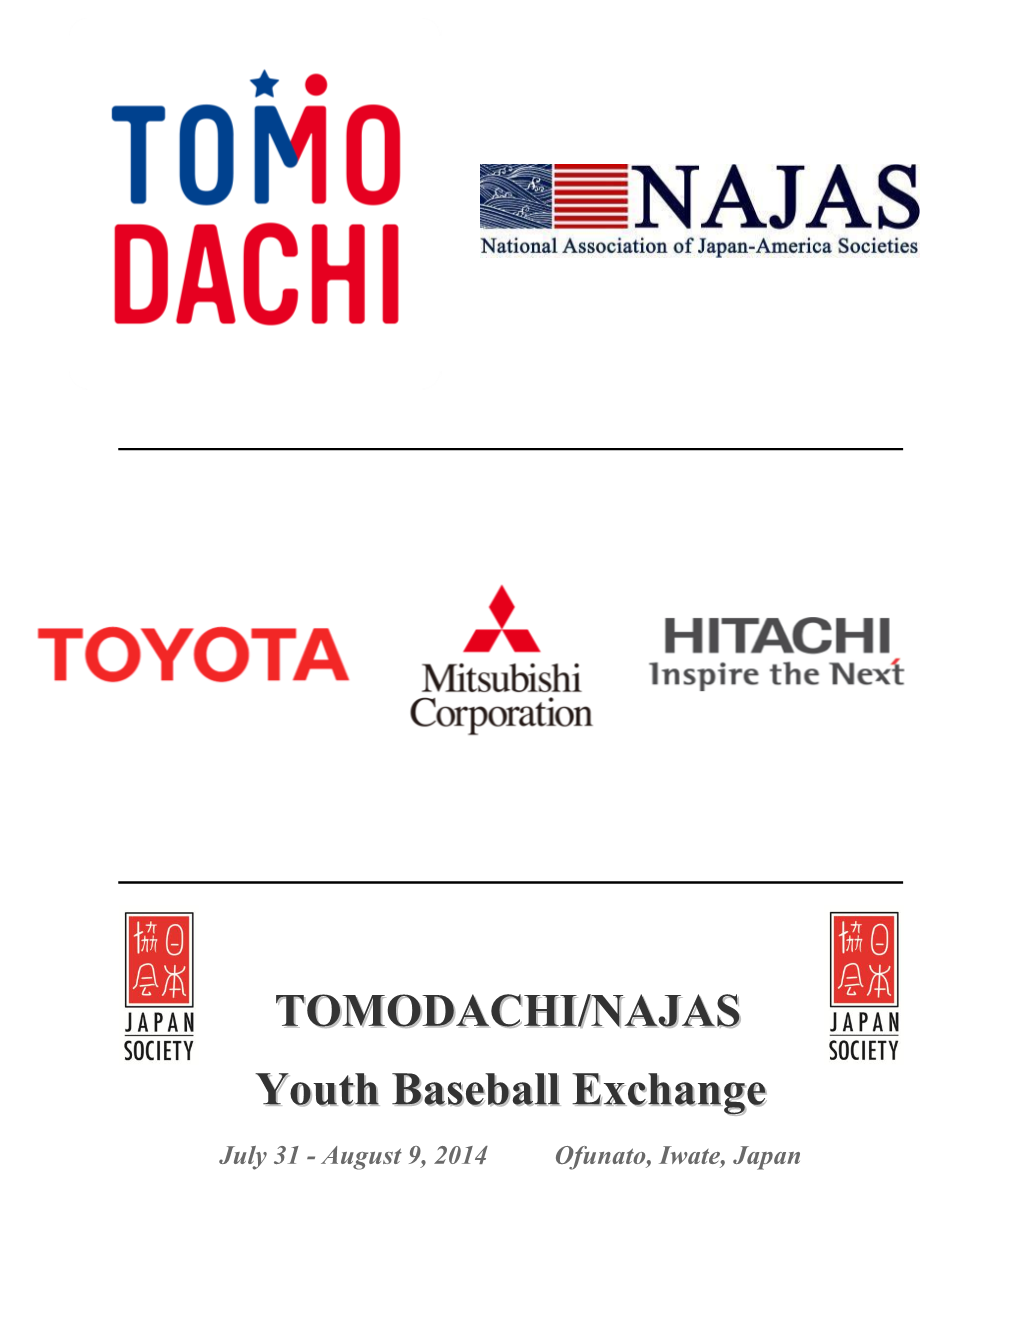 TOMODACHI/NAJAS Youth Baseball Exchange